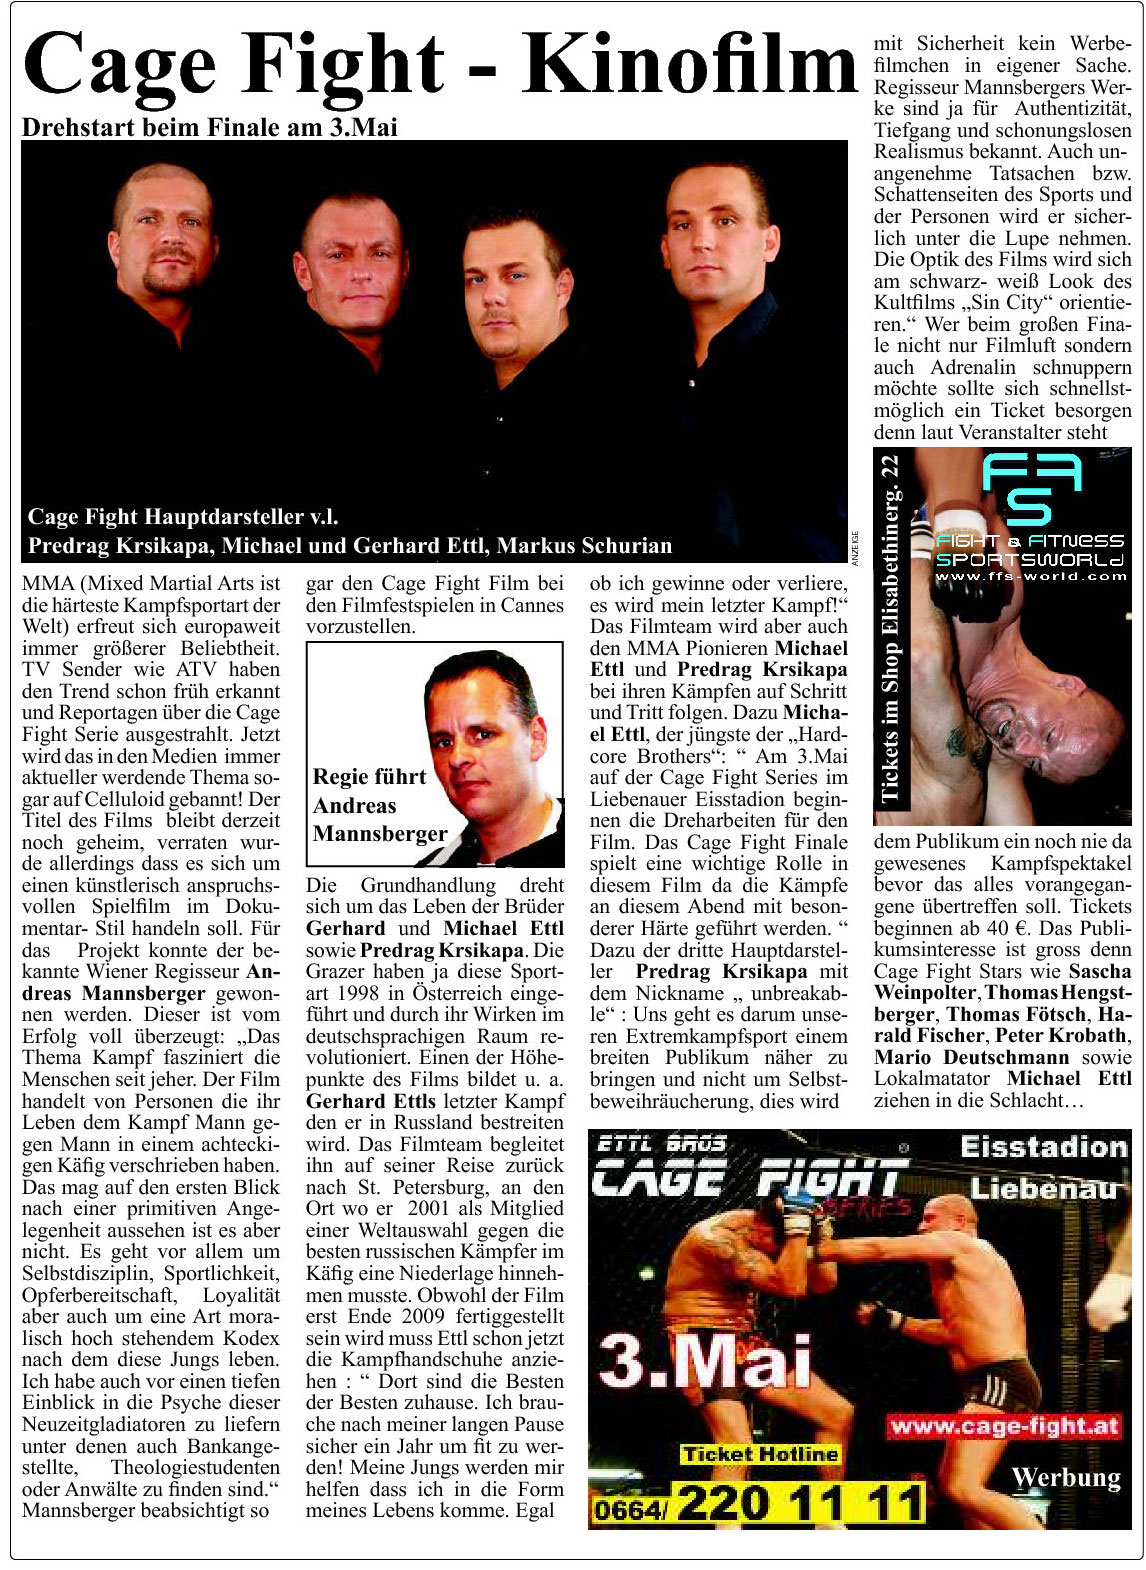 Der Grazer 14. April 2008